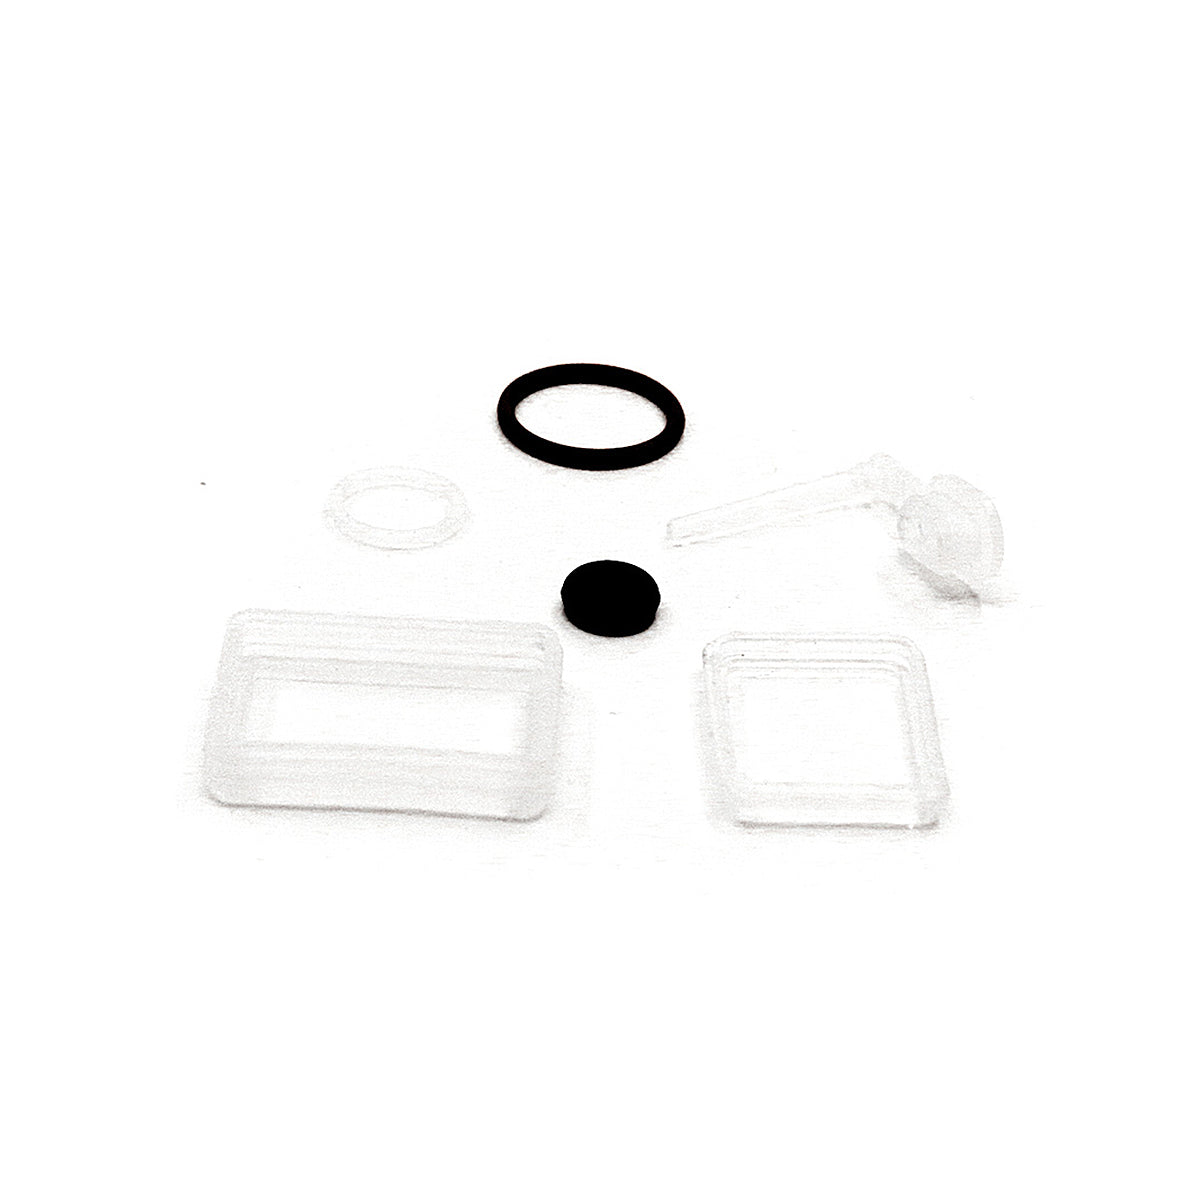 DotShell RBA Clear O-ring Kit by Atmizoo